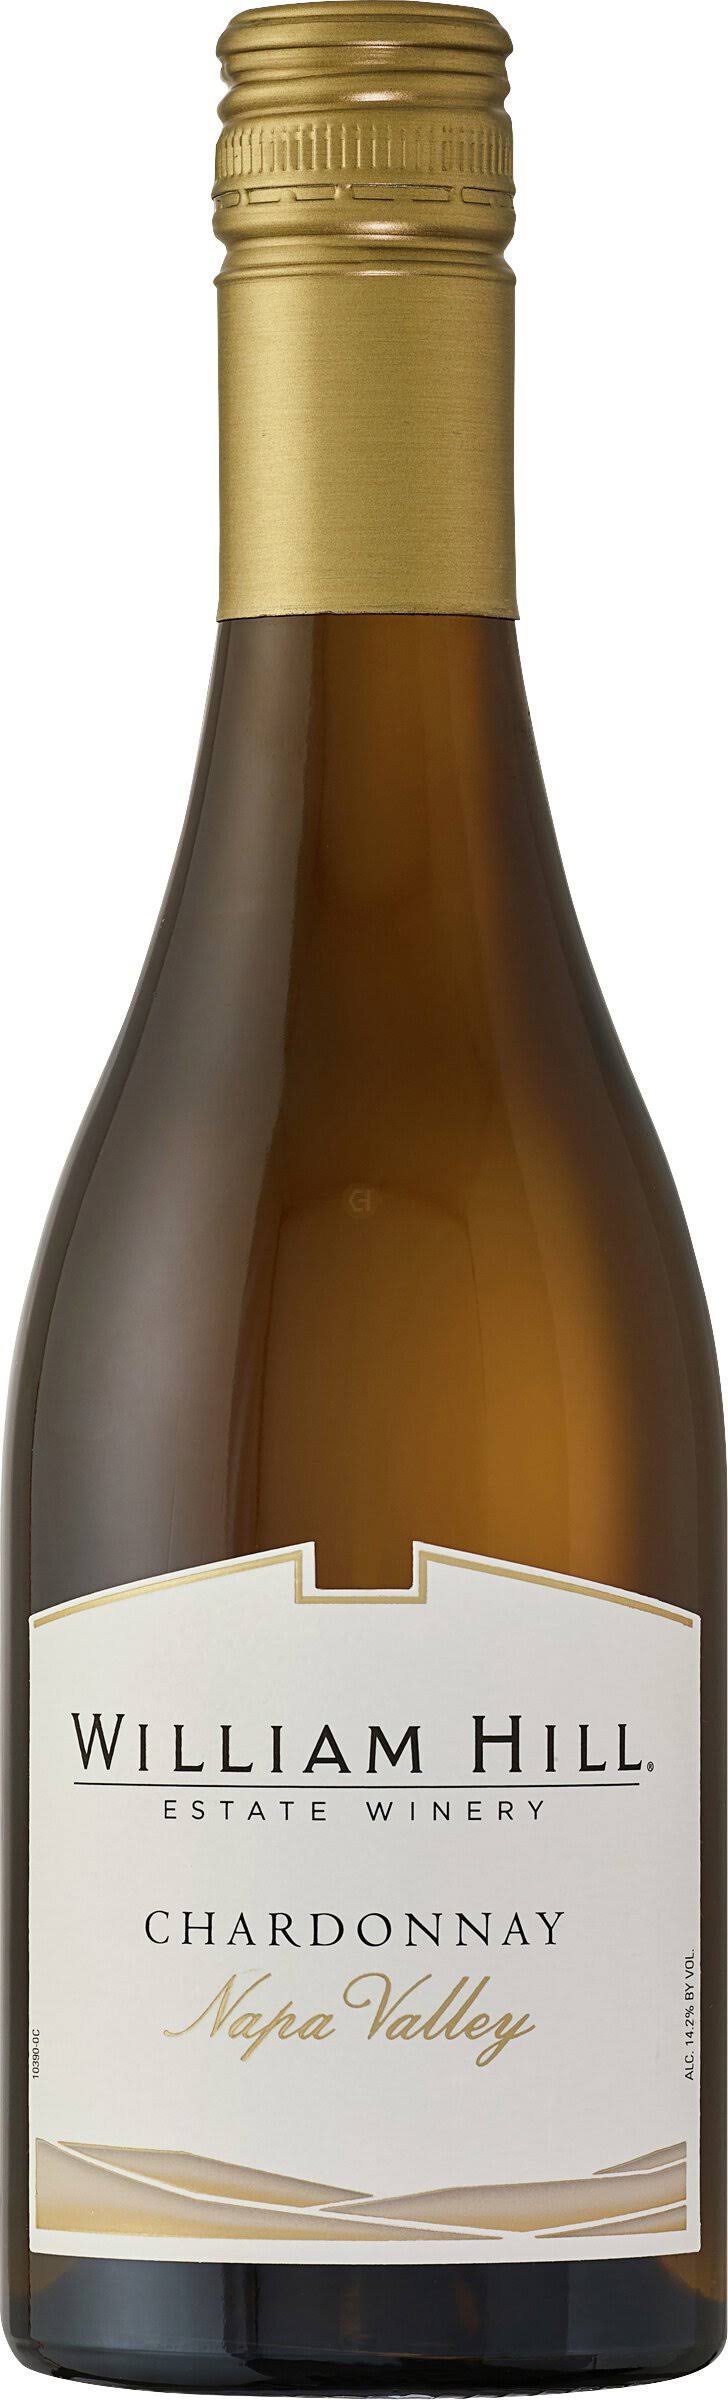 William Hill - Chardonnay Napa Valley 2018 (375ml)